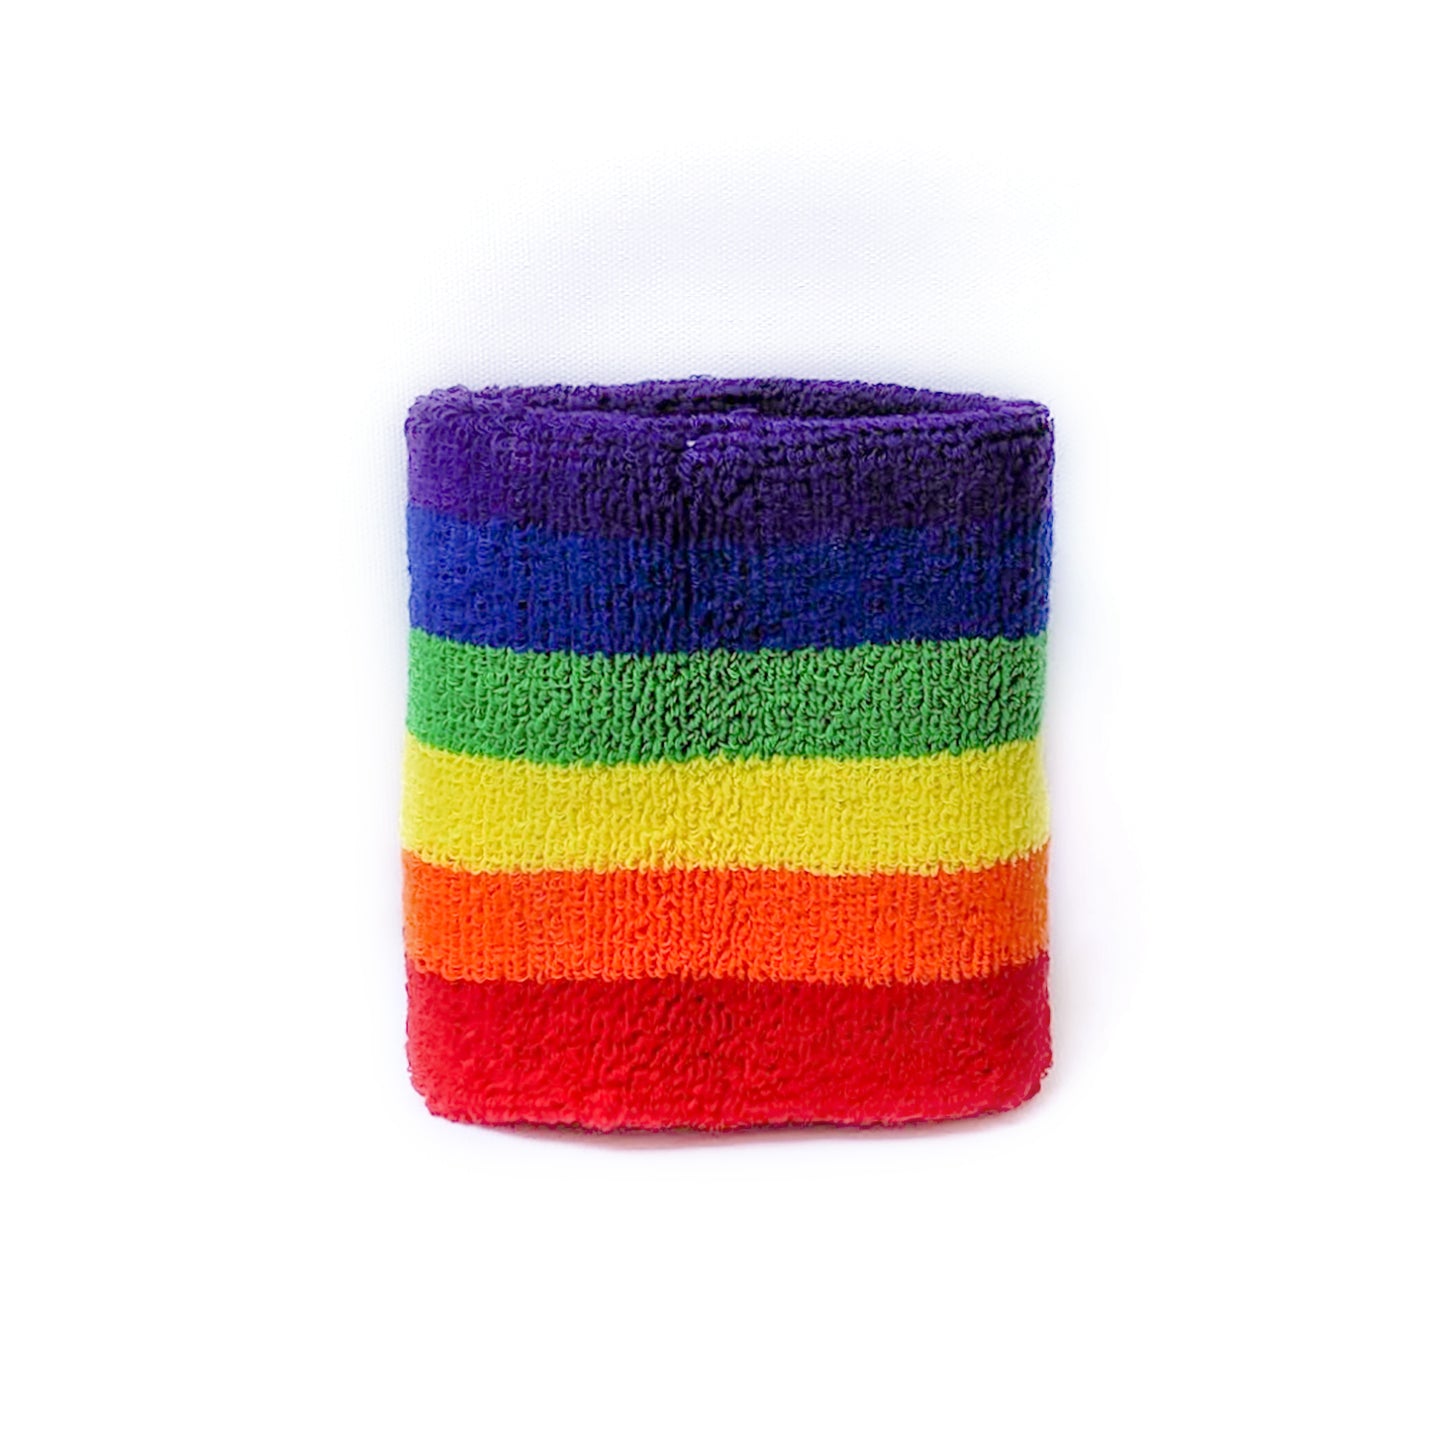 LGBTQ Rainbow Pride Wristband Sweatband Bracelet, bracelet, HEED THE HUM